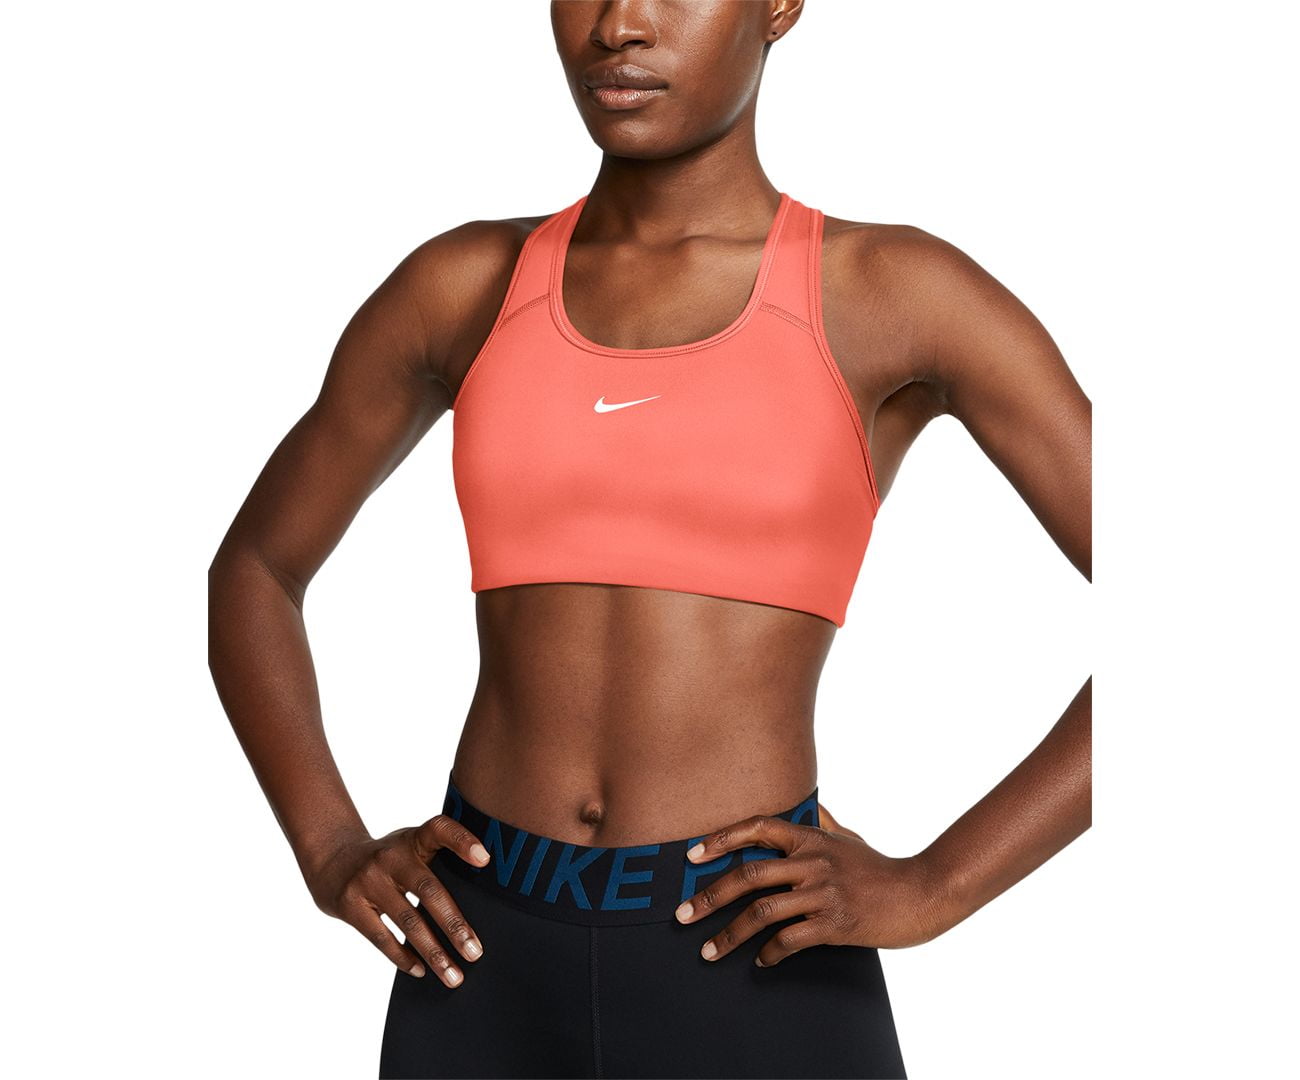 Bright and Stylish Neon Orange Sports Bra by Nike